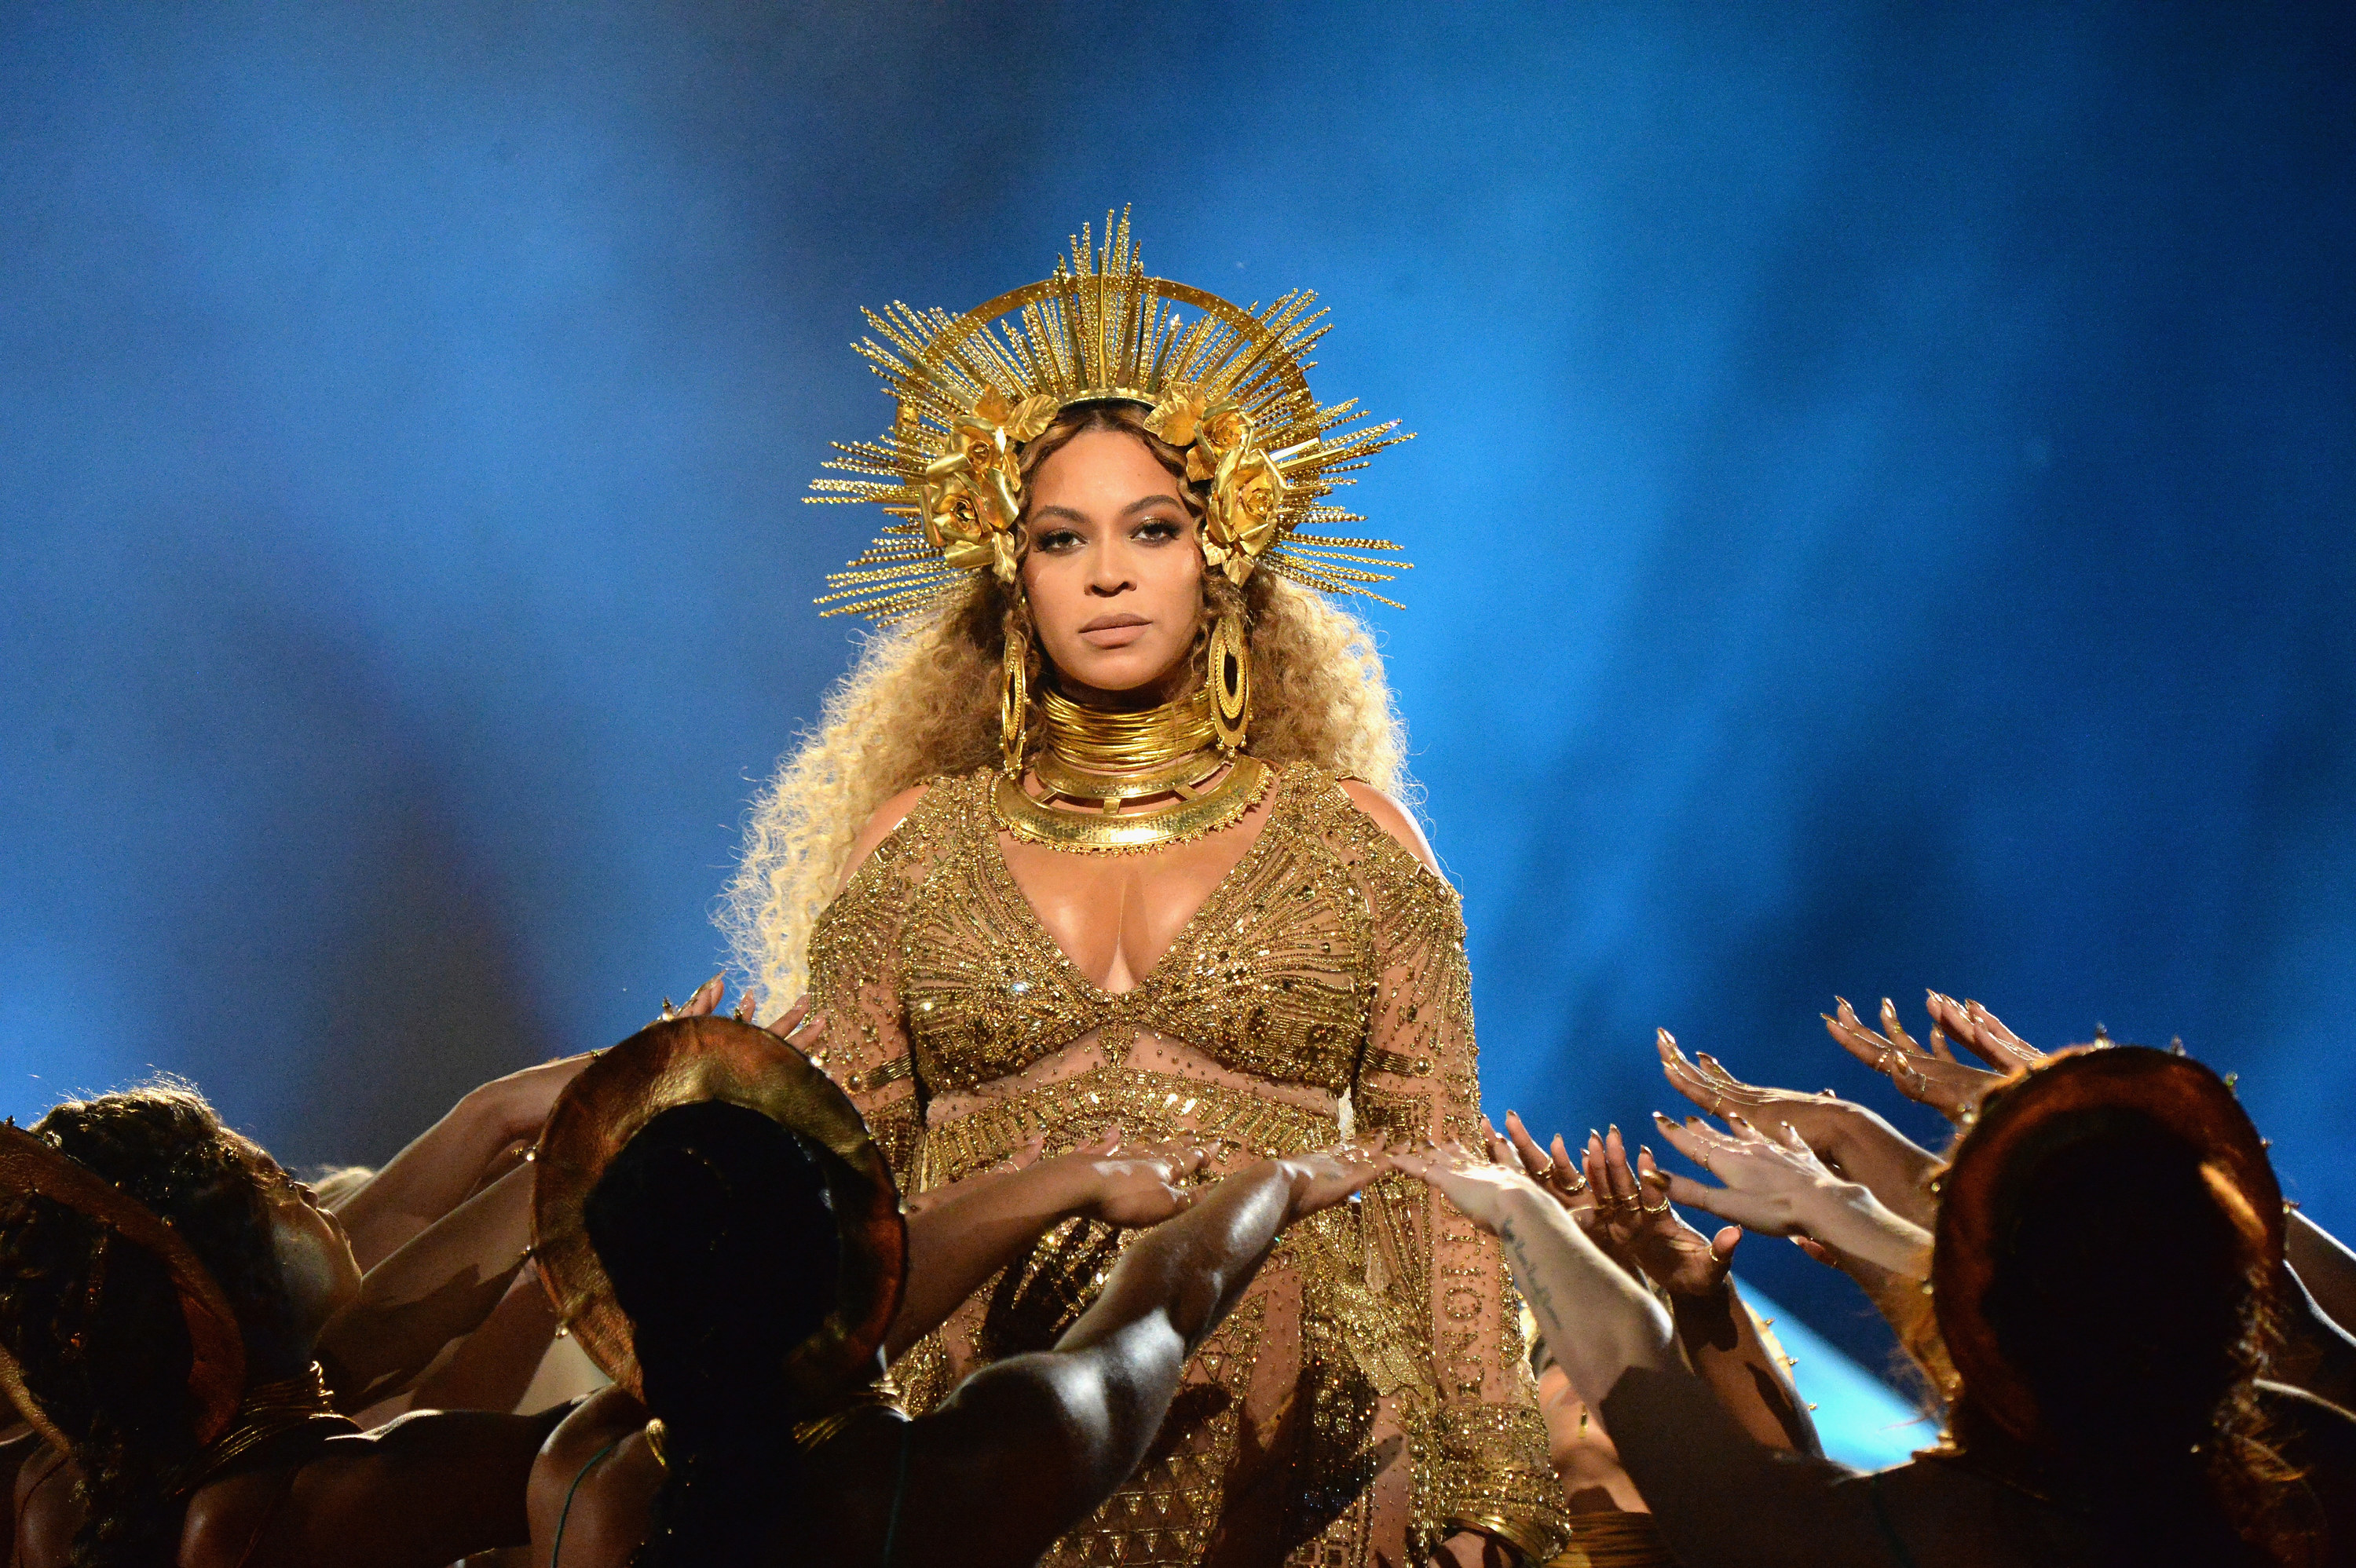 Kelis Claims Beyoncé Sampled Her On Renaissance Without Permission